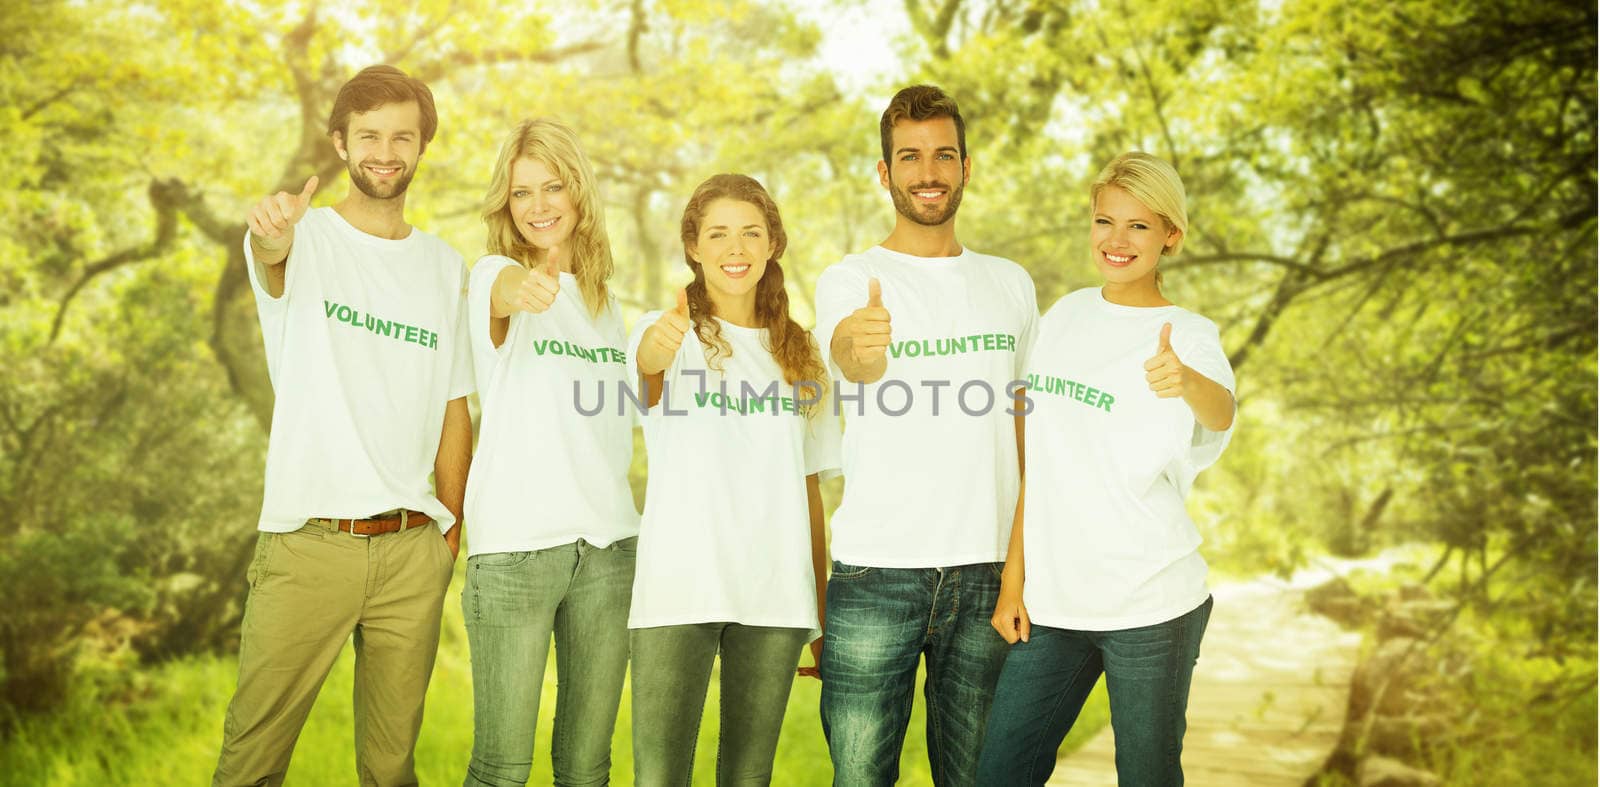 Composite image of group portrait of happy volunteers gesturing thumbs up by Wavebreakmedia